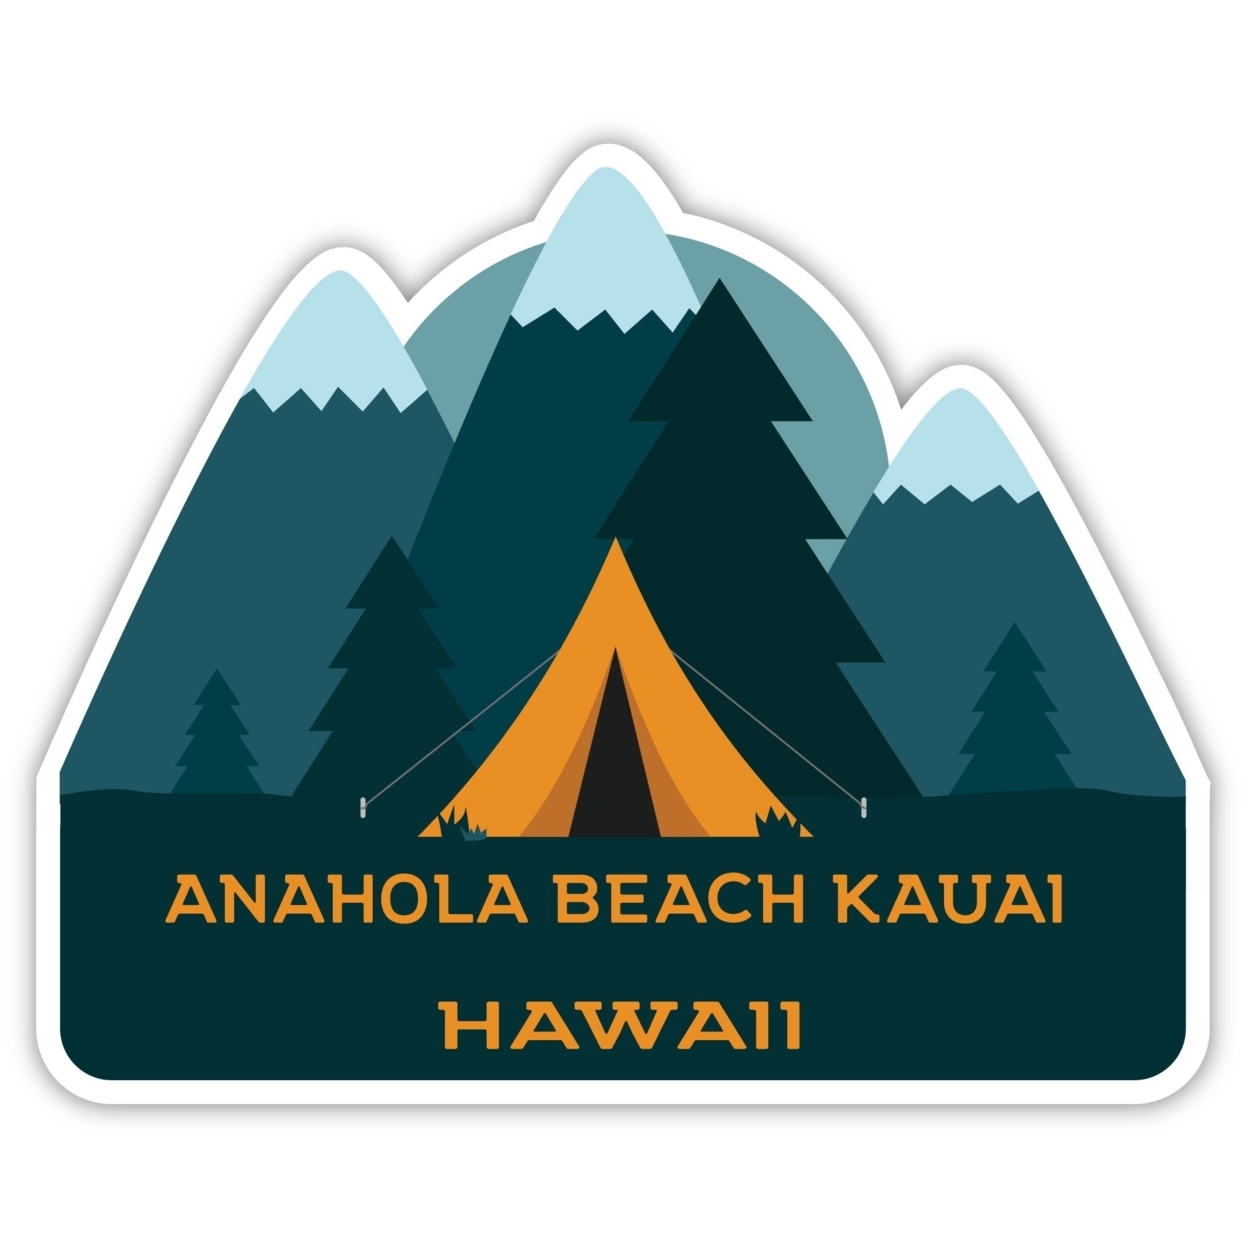 Anahola Beach Kauai Hawaii Souvenir Decorative Stickers (Choose Theme And Size) - 4-Pack, 4-Inch, Tent